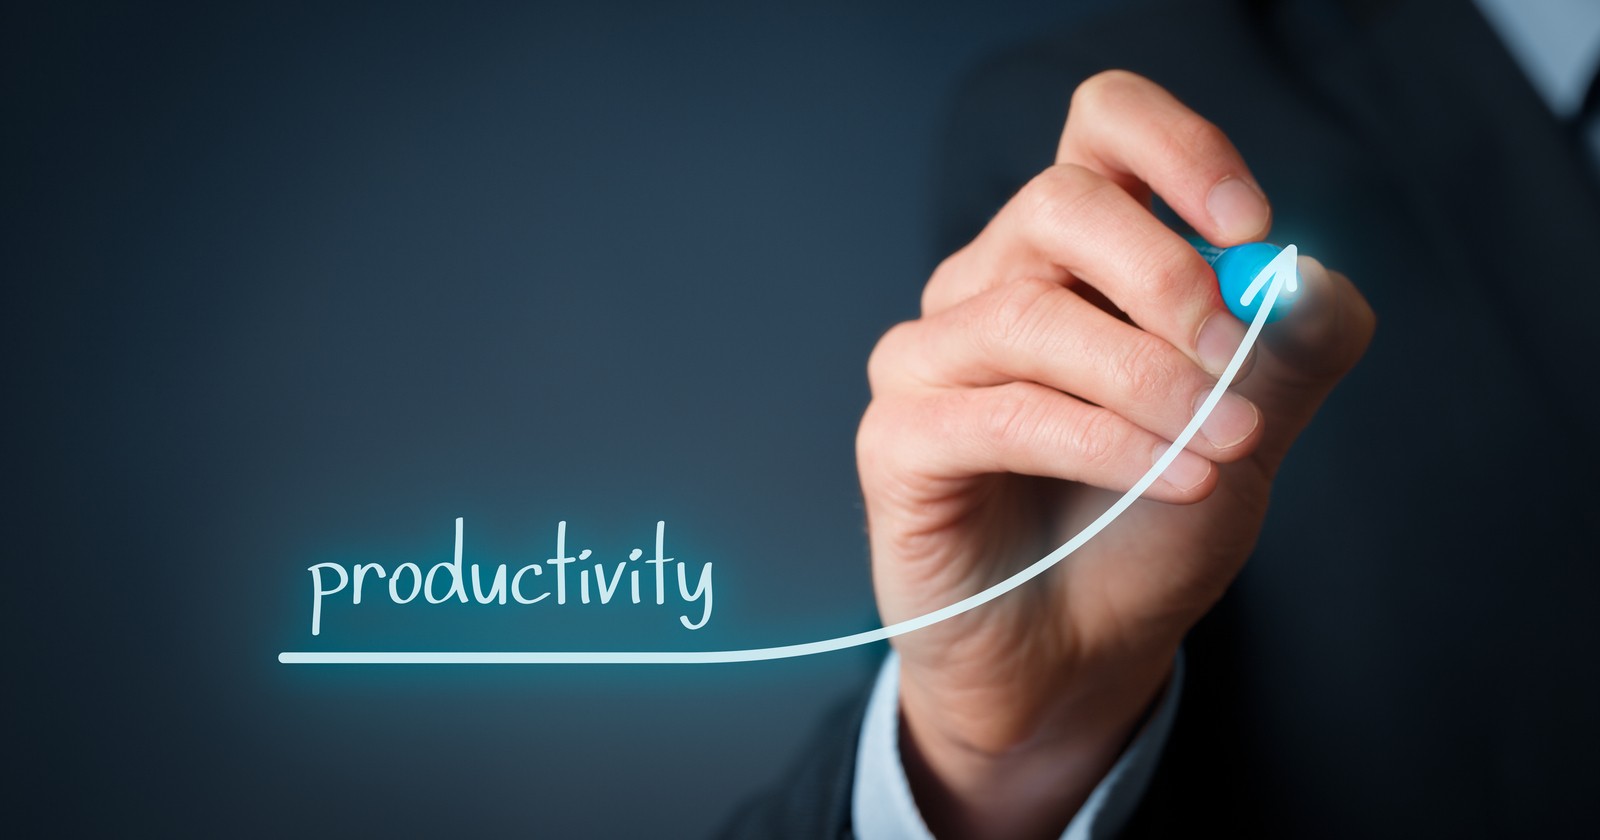 Habits destroy your focus and productivity